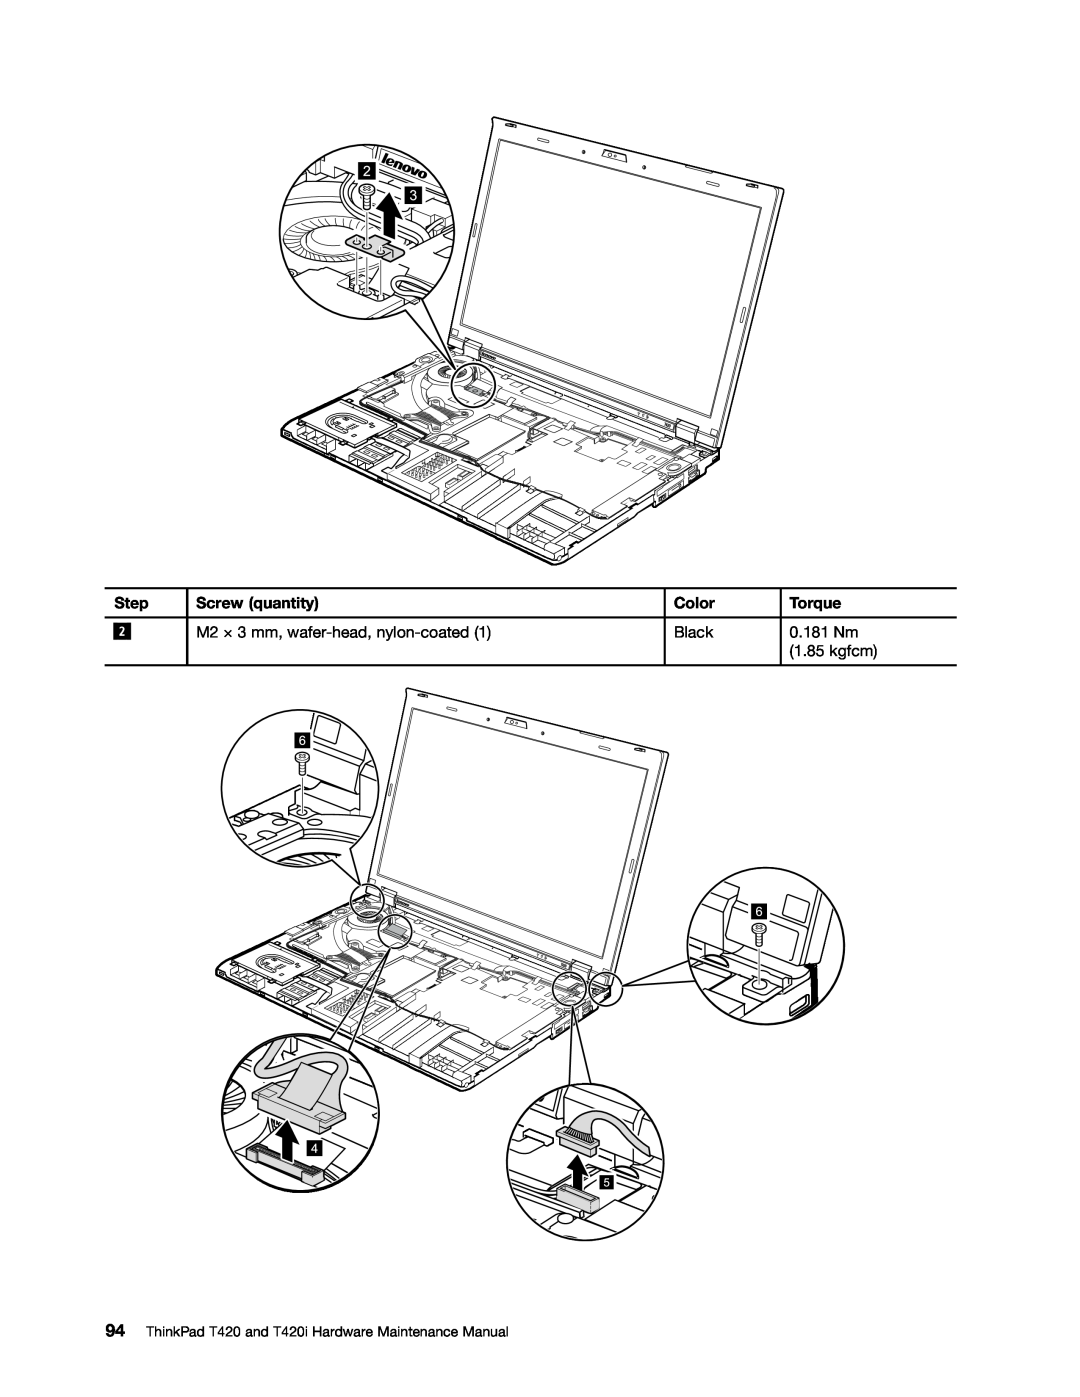 Lenovo manual Step, Screw quantity, Color, Torque, ThinkPad T420 and T420i Hardware Maintenance Manual 